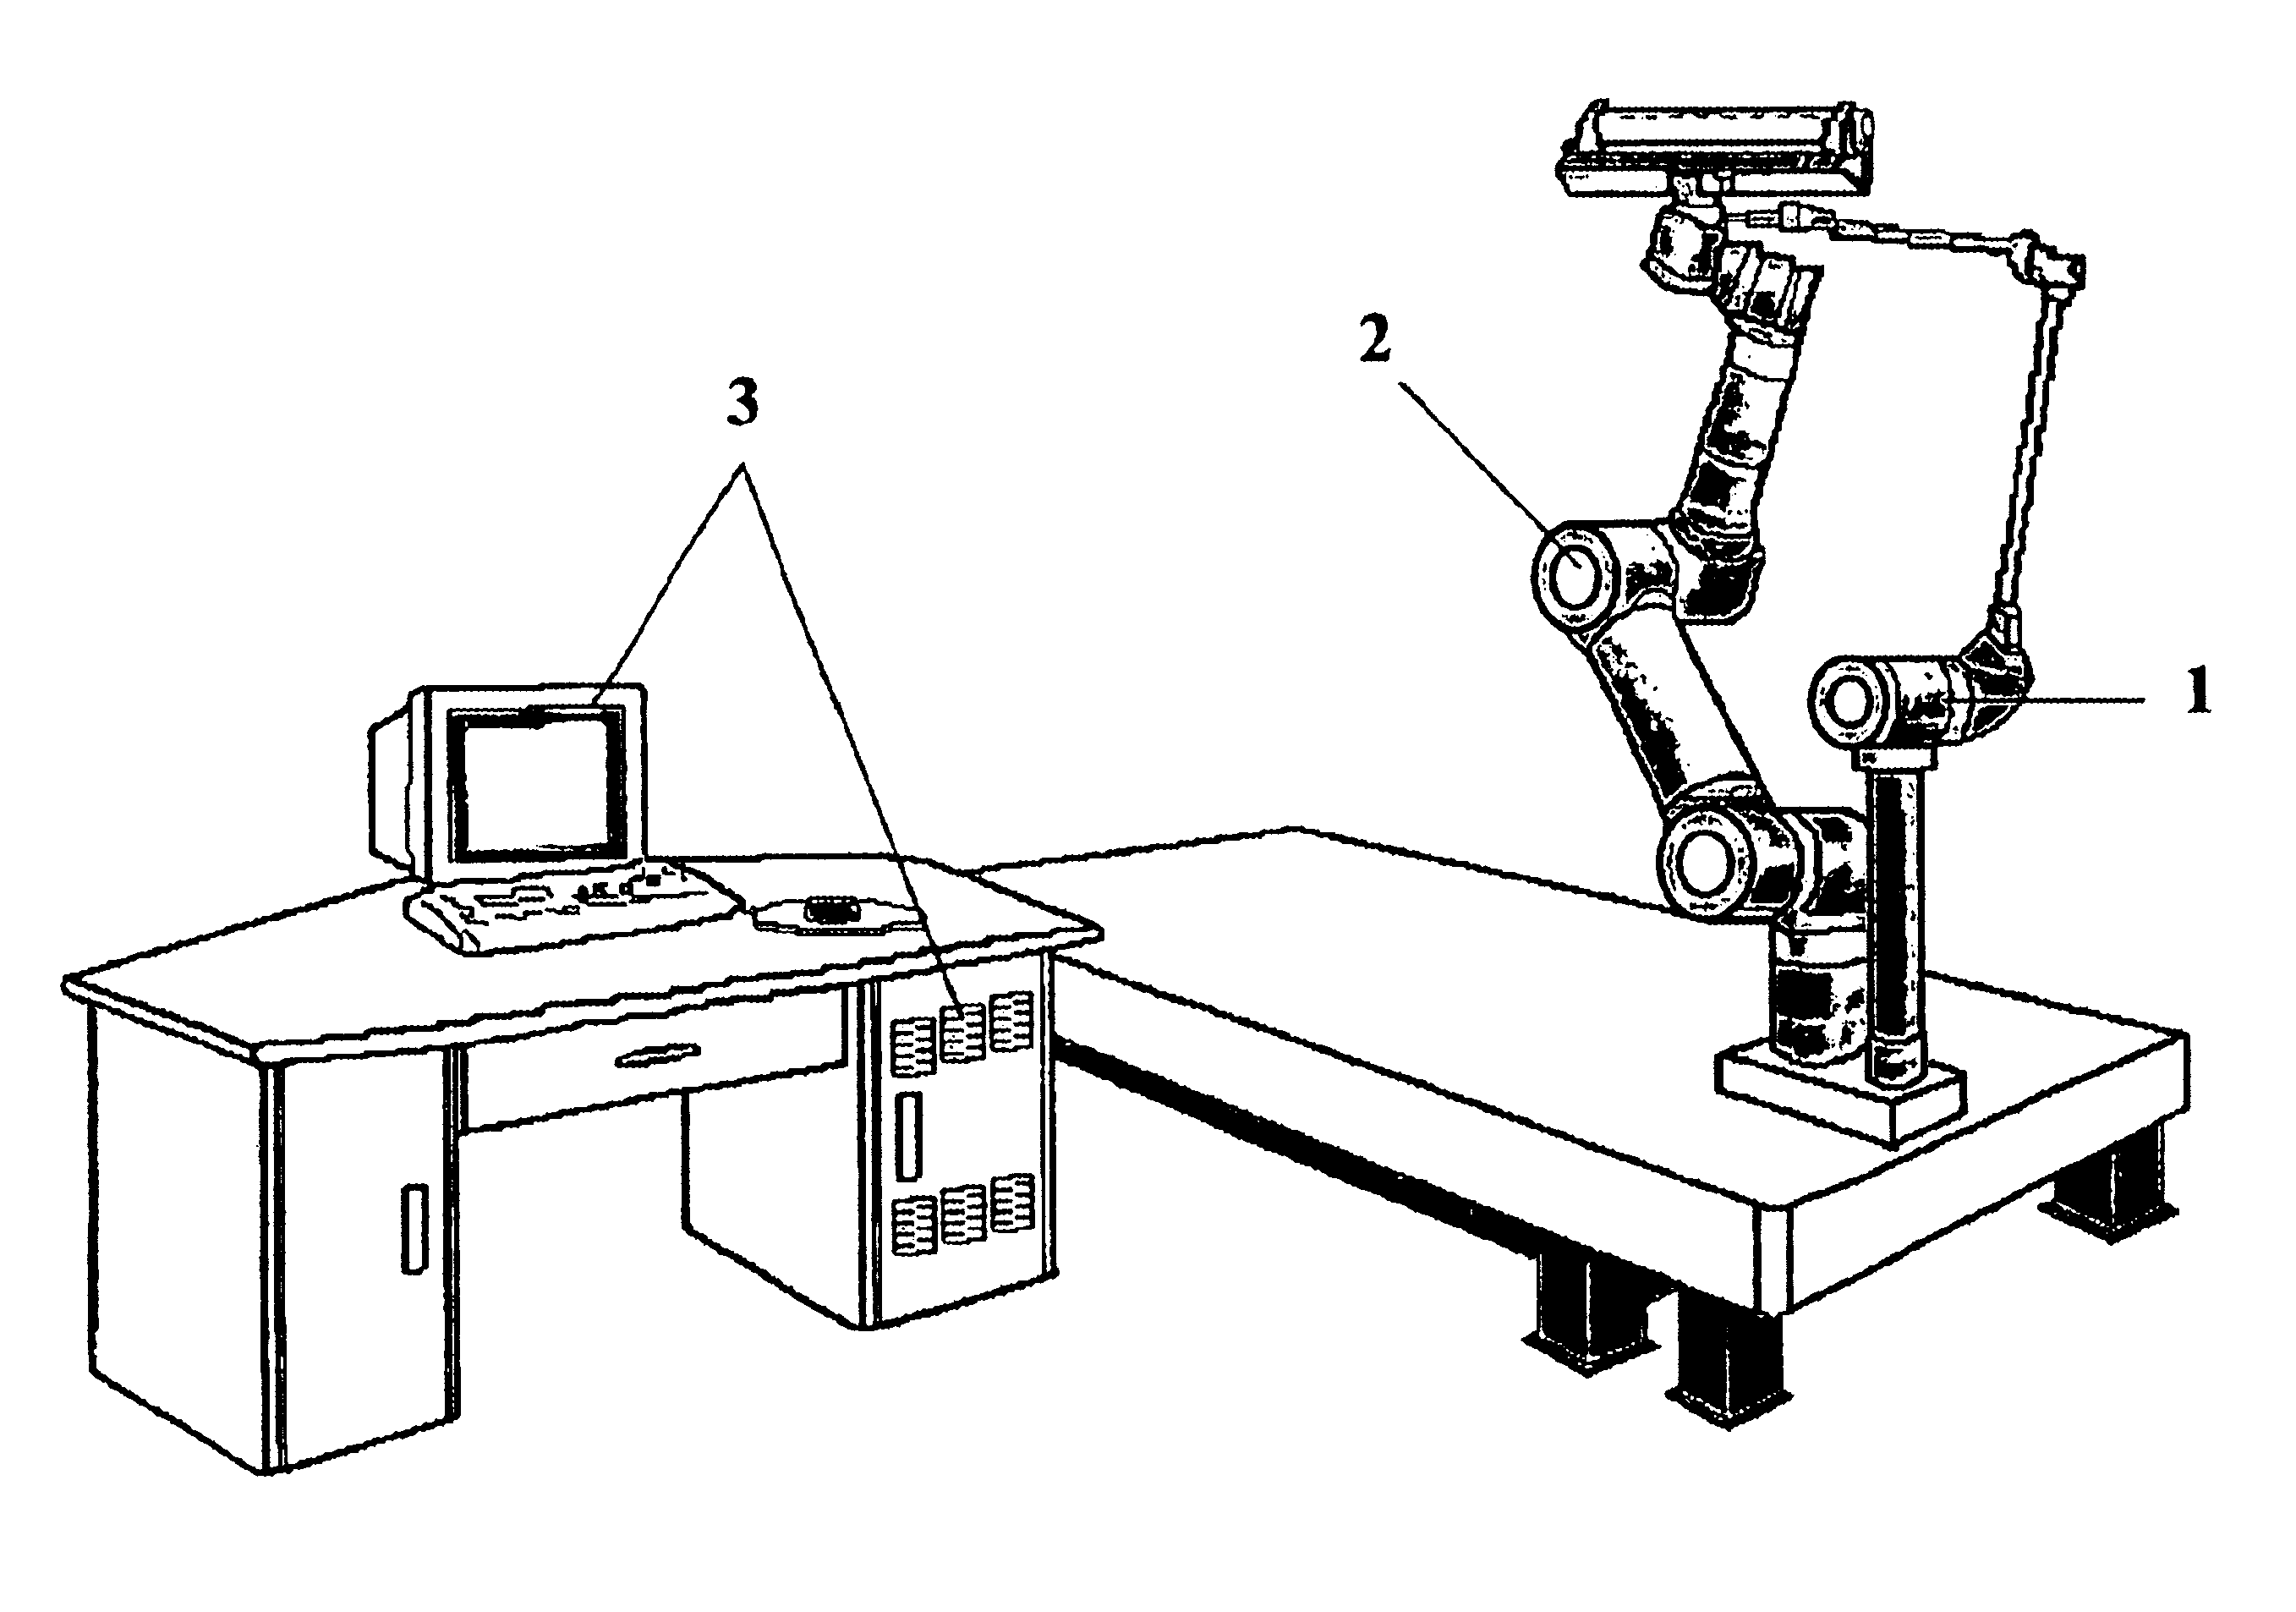 Ultra-precision robotic system